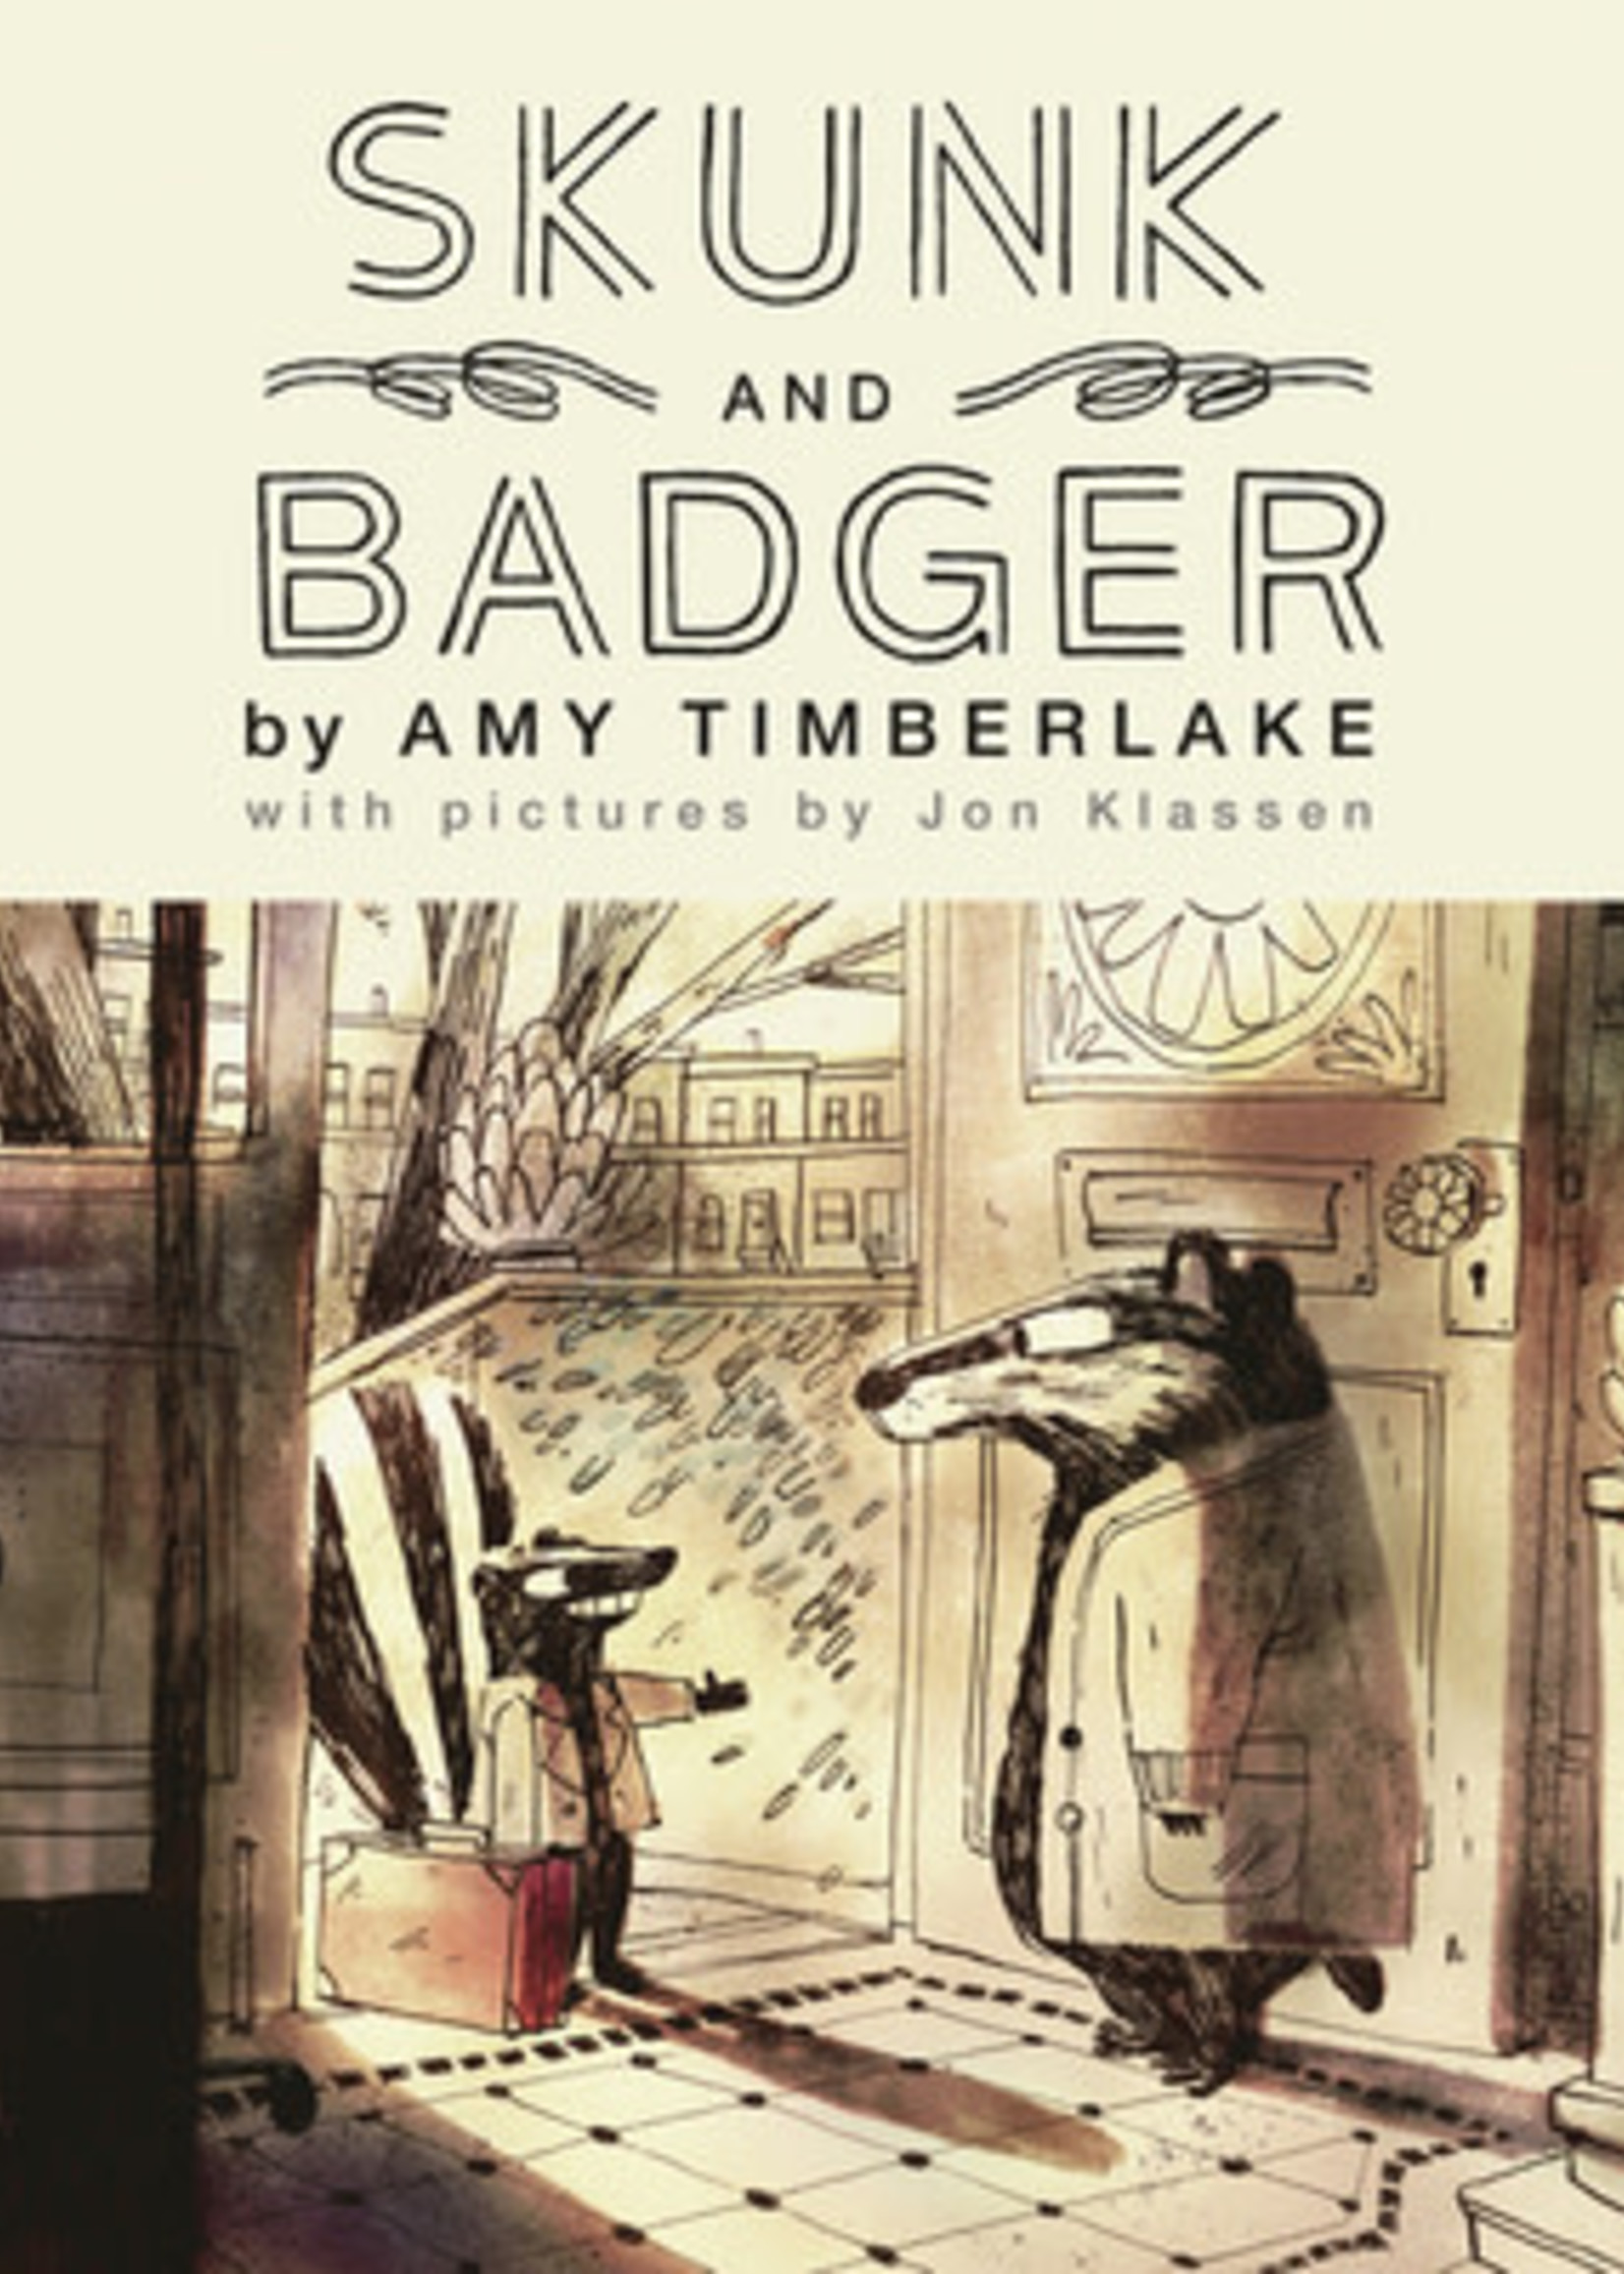 Skunk and Badger (Skunk and Badger #1) by Amy Timberlake, Jon Klassen